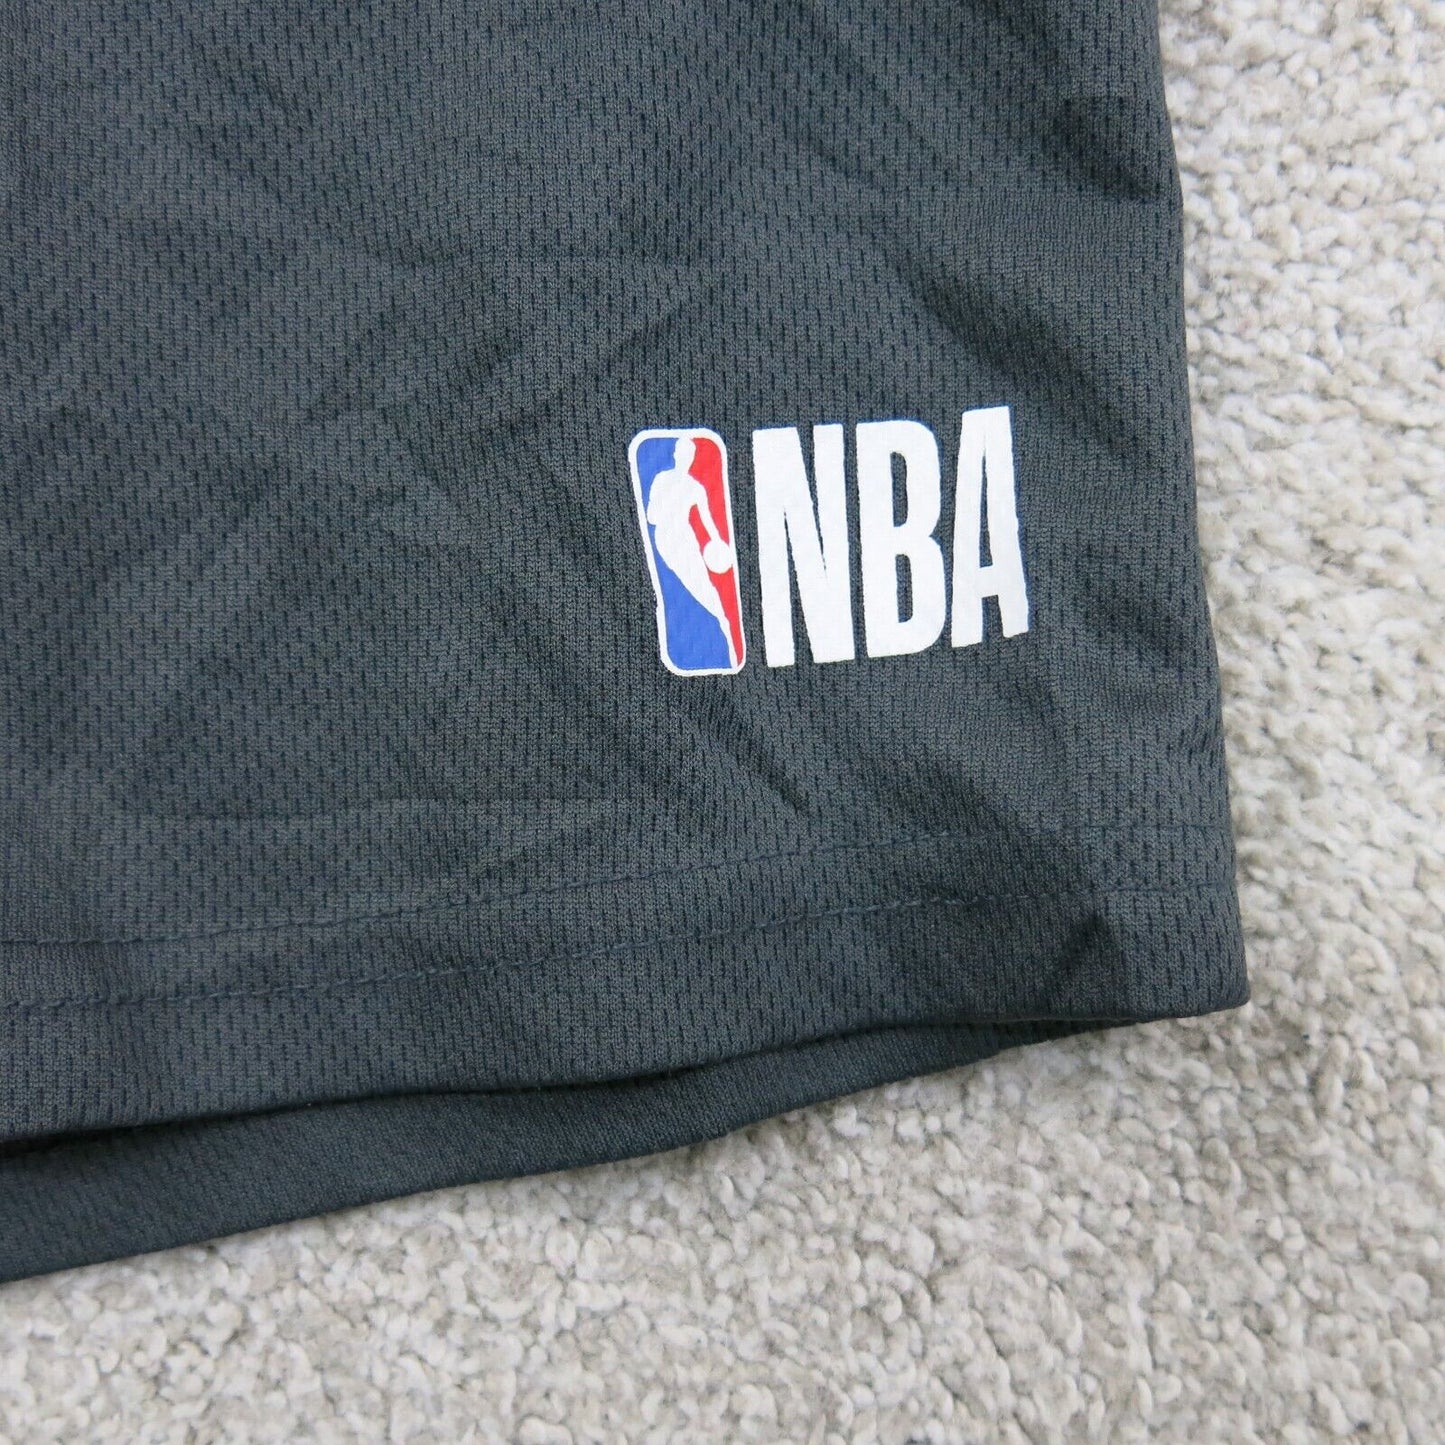 NBA Mens Athletic Shorts Sports/Bsketball Elastic Waist Gray Size Small